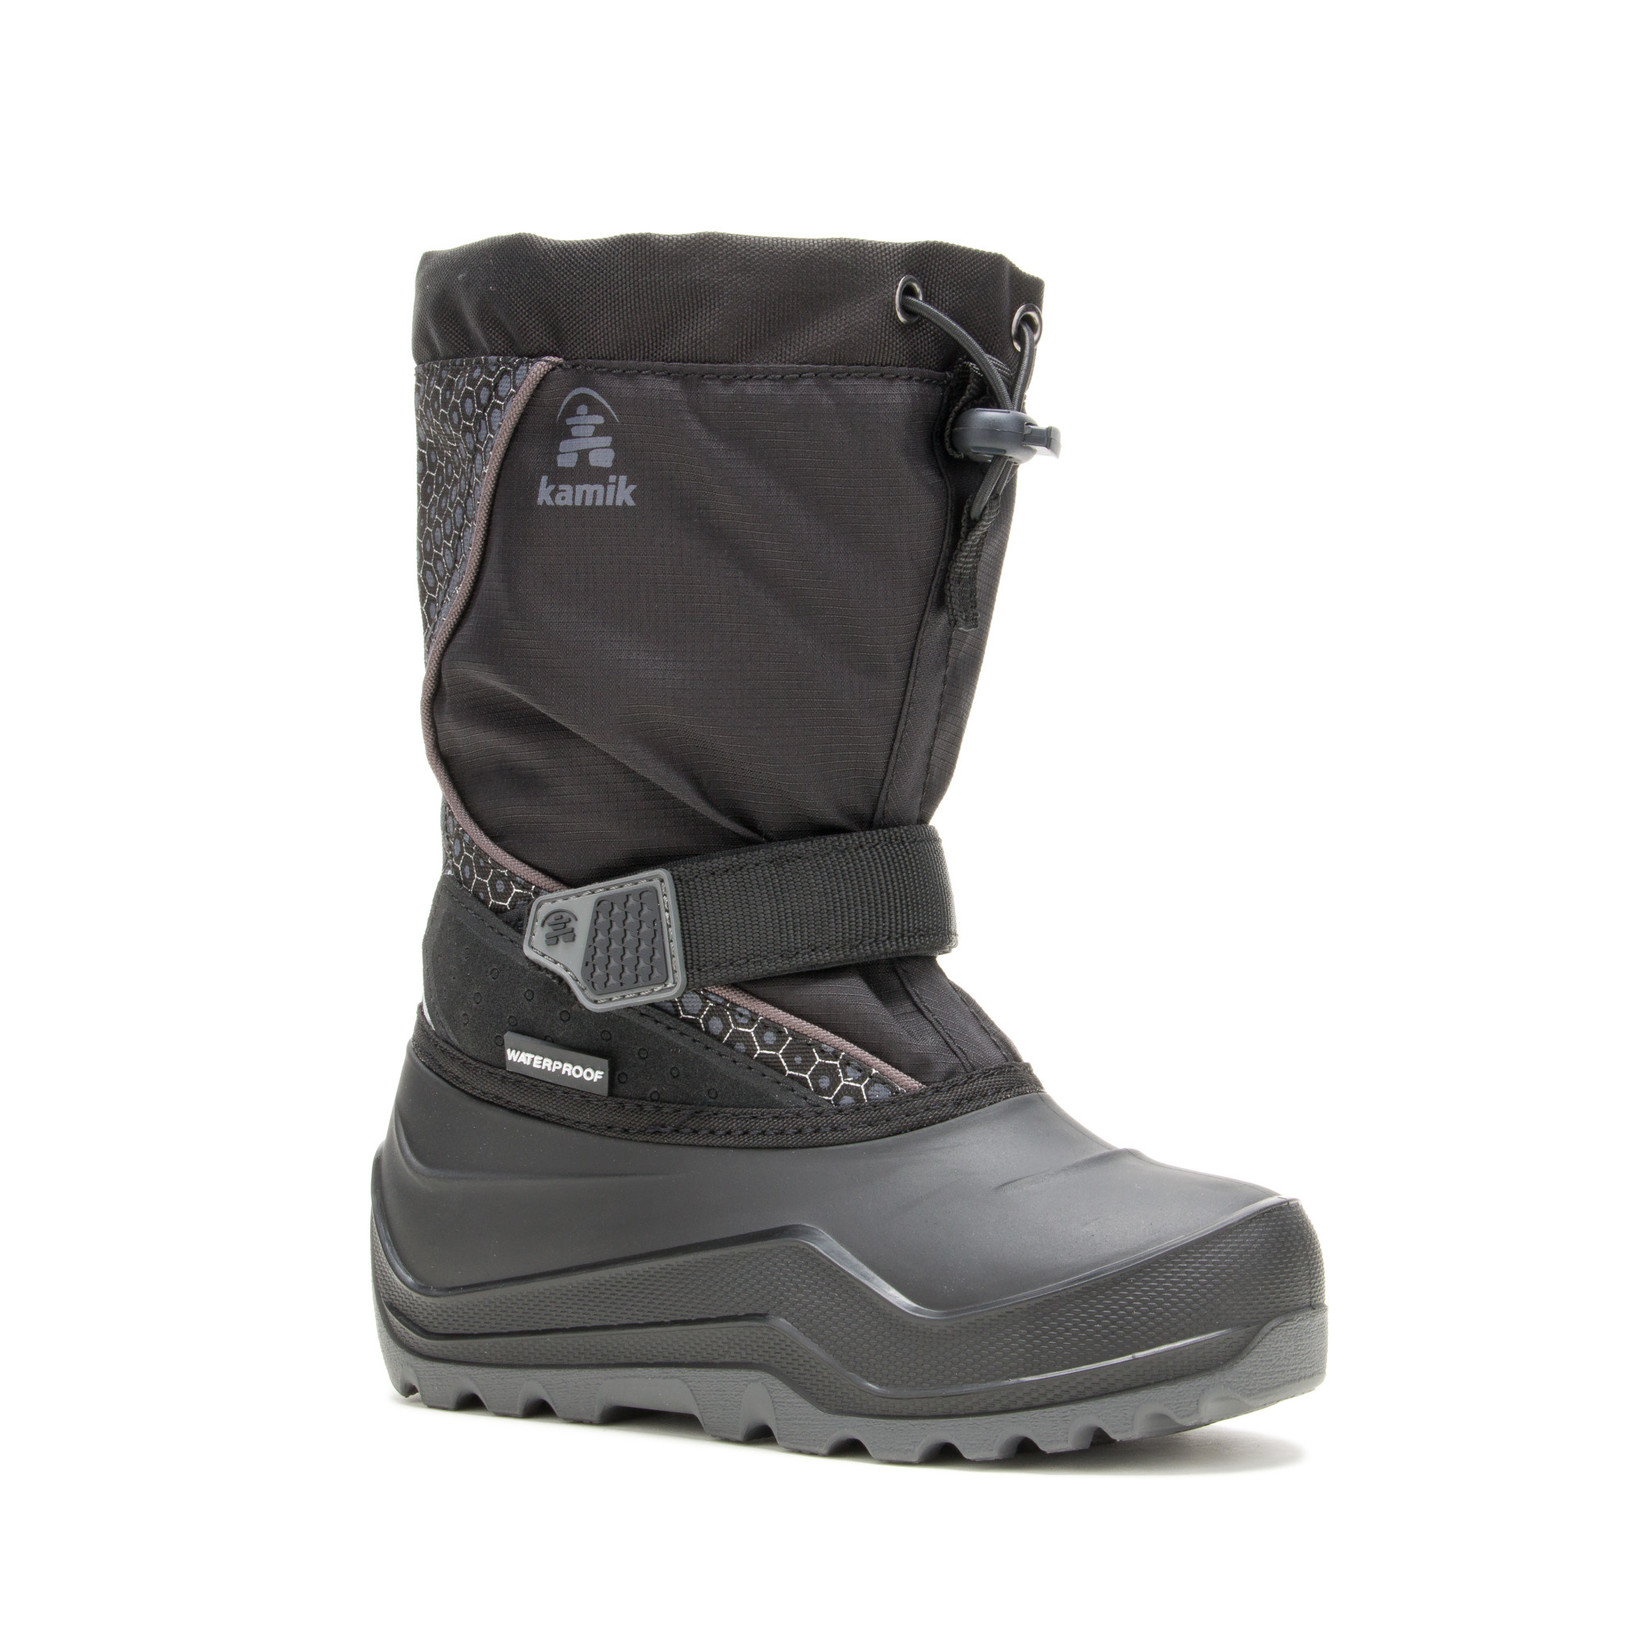 Kamik The SNOWFALL P2 winter boots